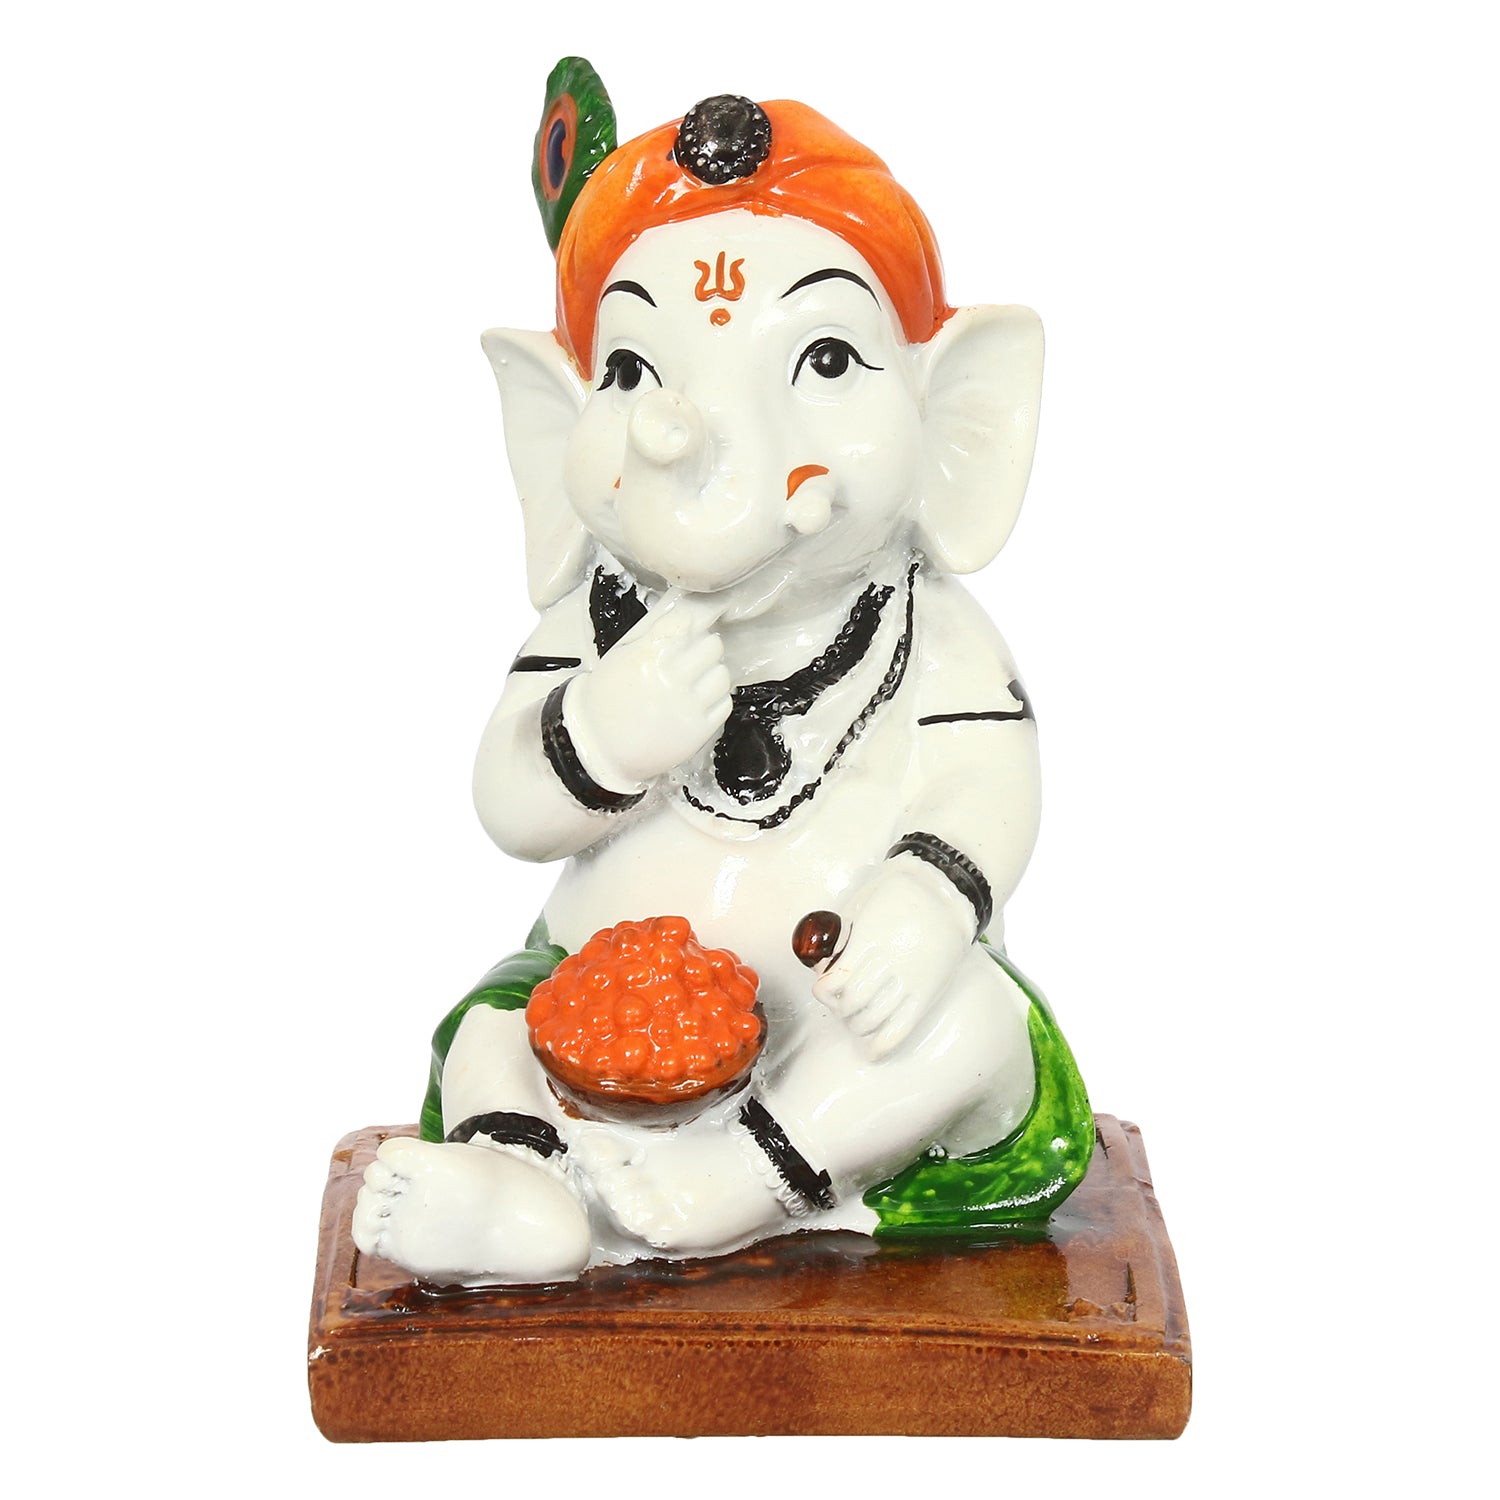 Decorative Polyresin Lord Ganesha Idol eating Ladoo in Lord Krishna Avatar (White, Orange, Green) 4